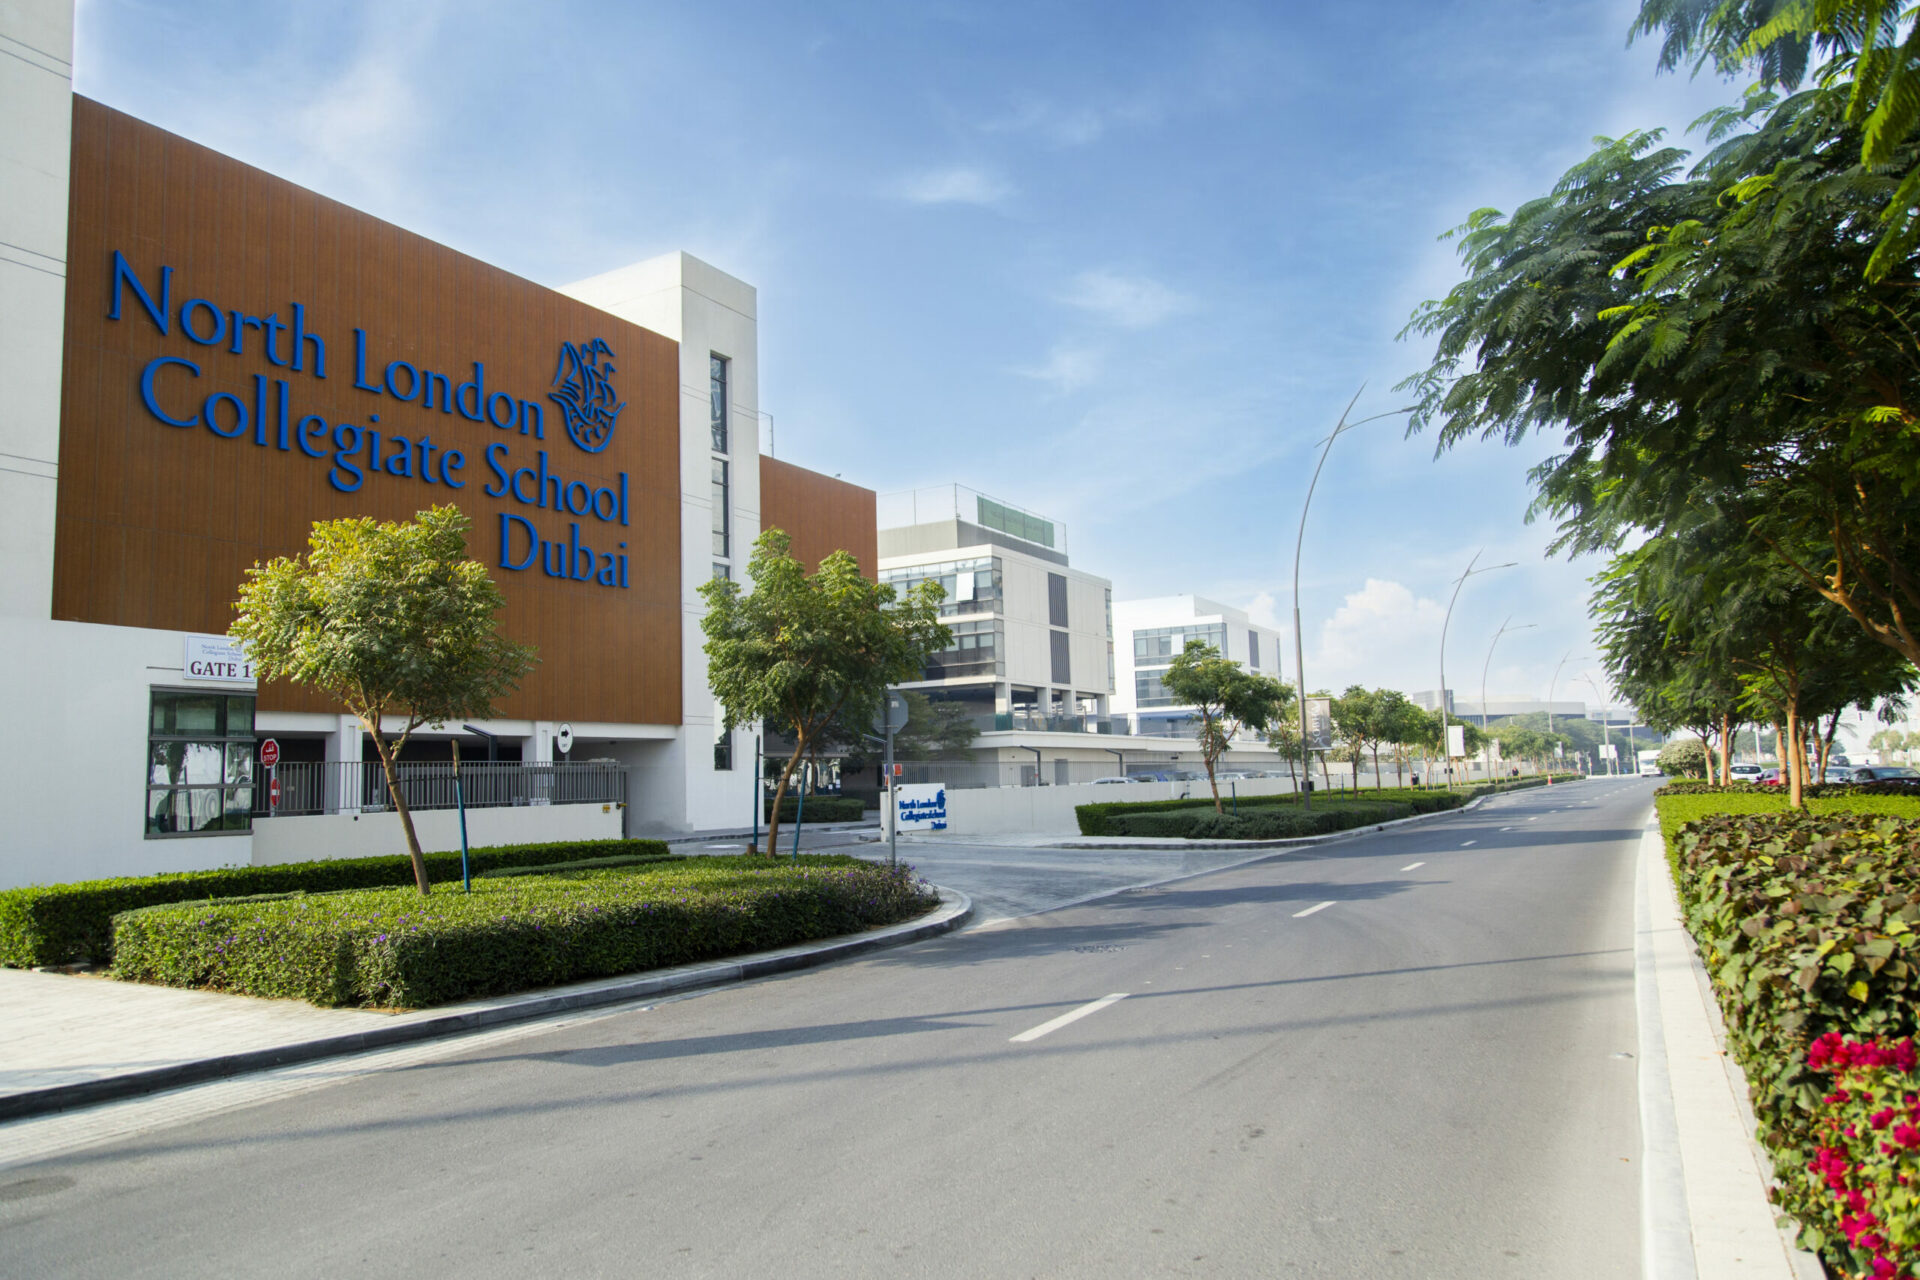 Image of school NLCS Dubai